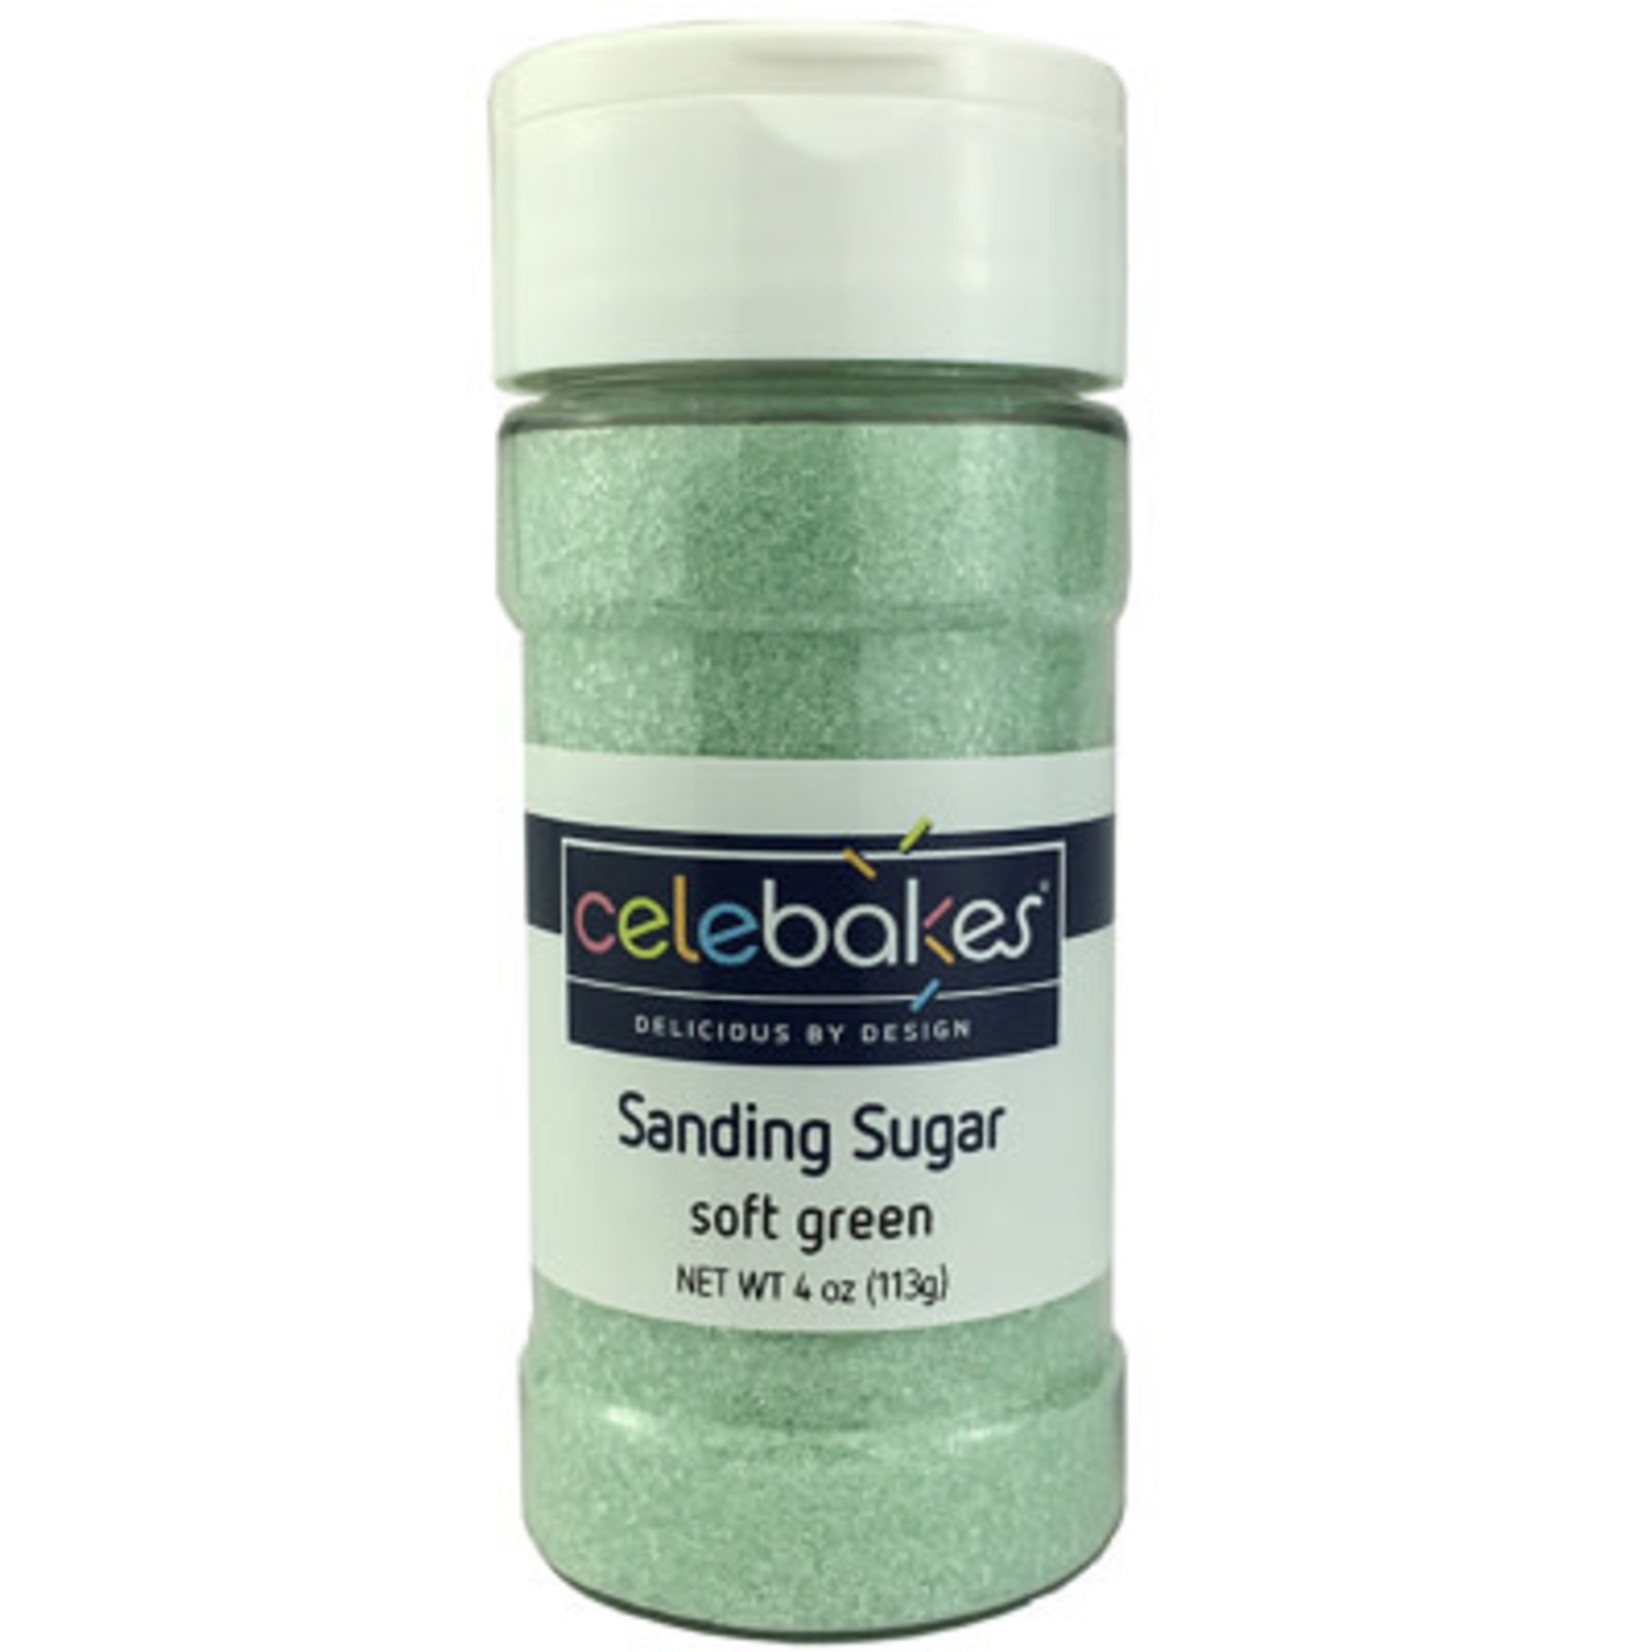 TWS Celebakes Soft Green Sanding Sugar, 4 oz